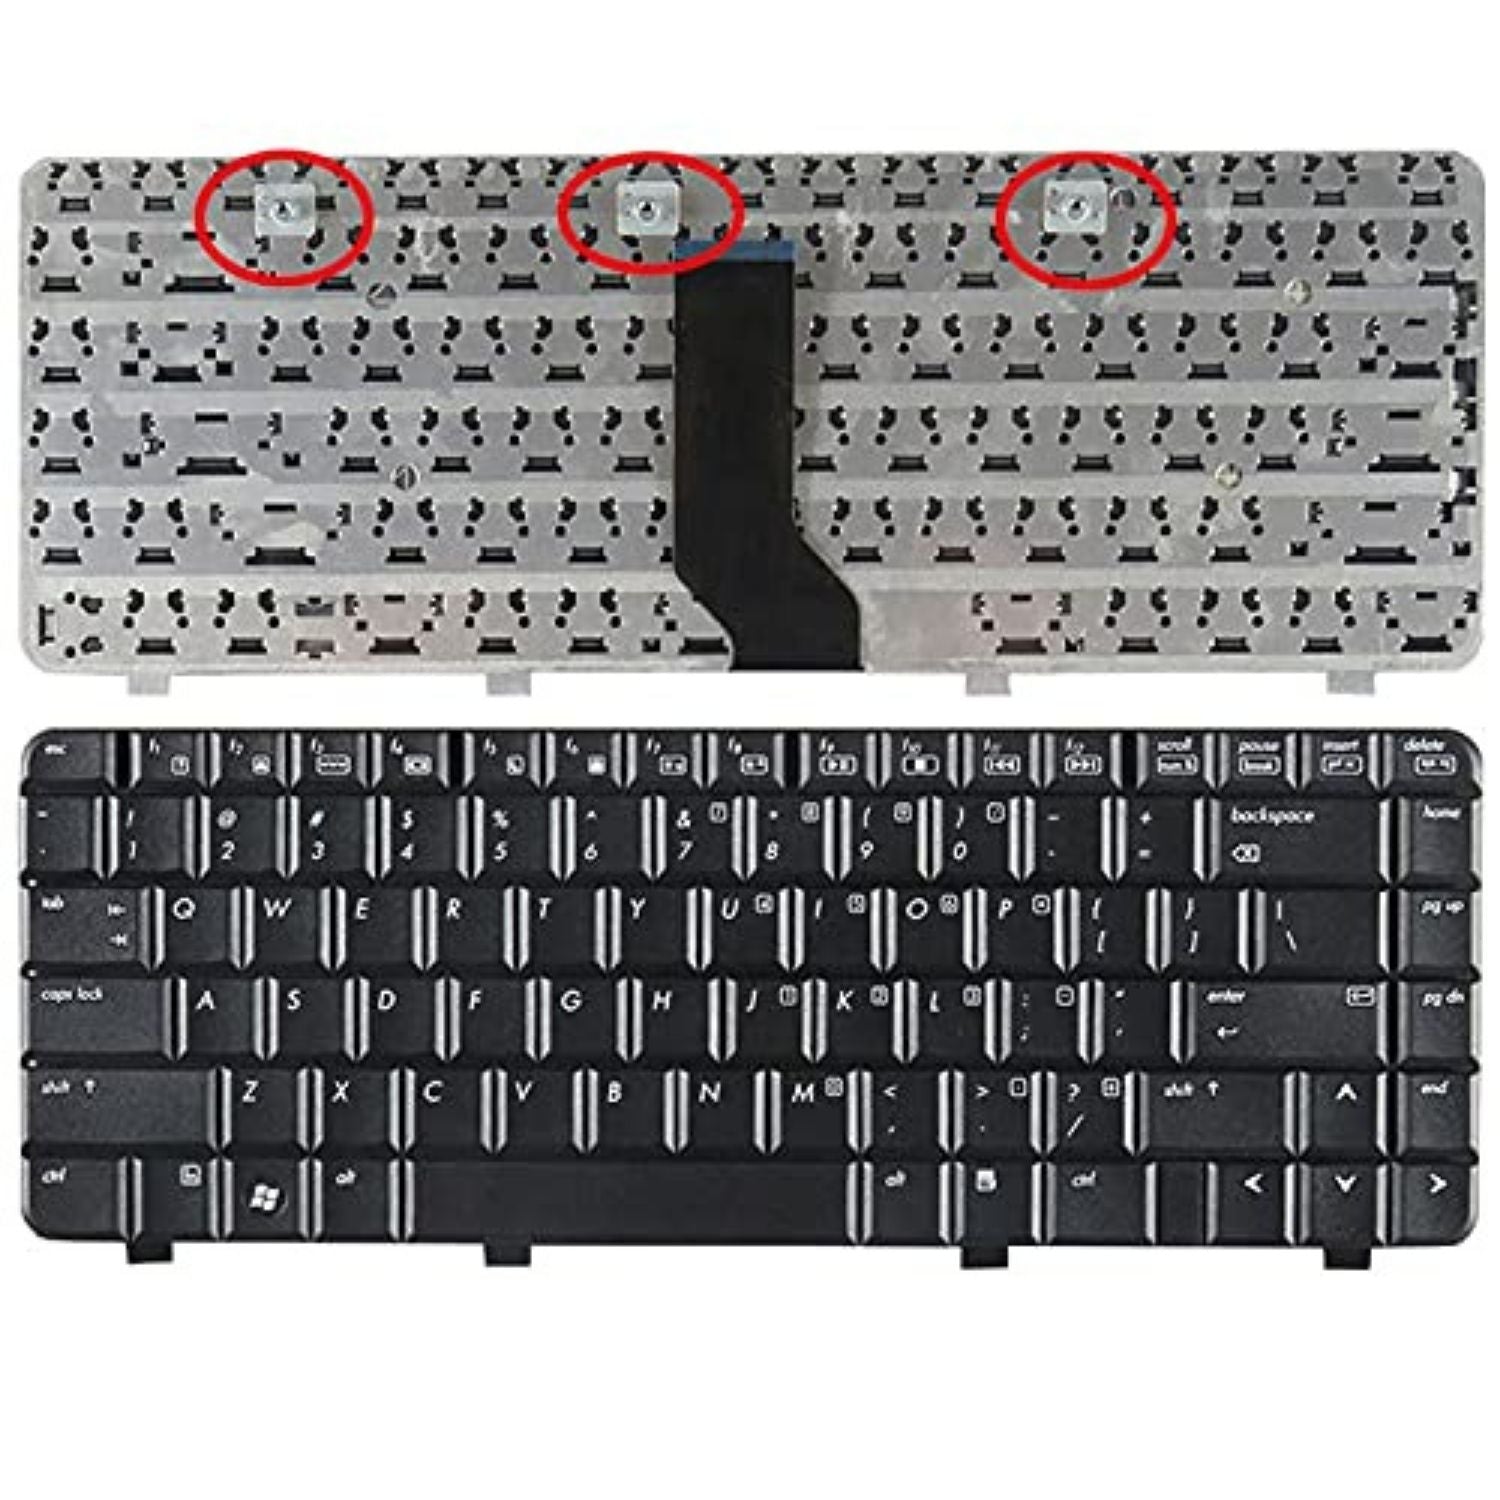 HP Laptop keyboard For 417068-001 DV2000 DV2100 DV2500 V3000 V3500 V3700 448615-001